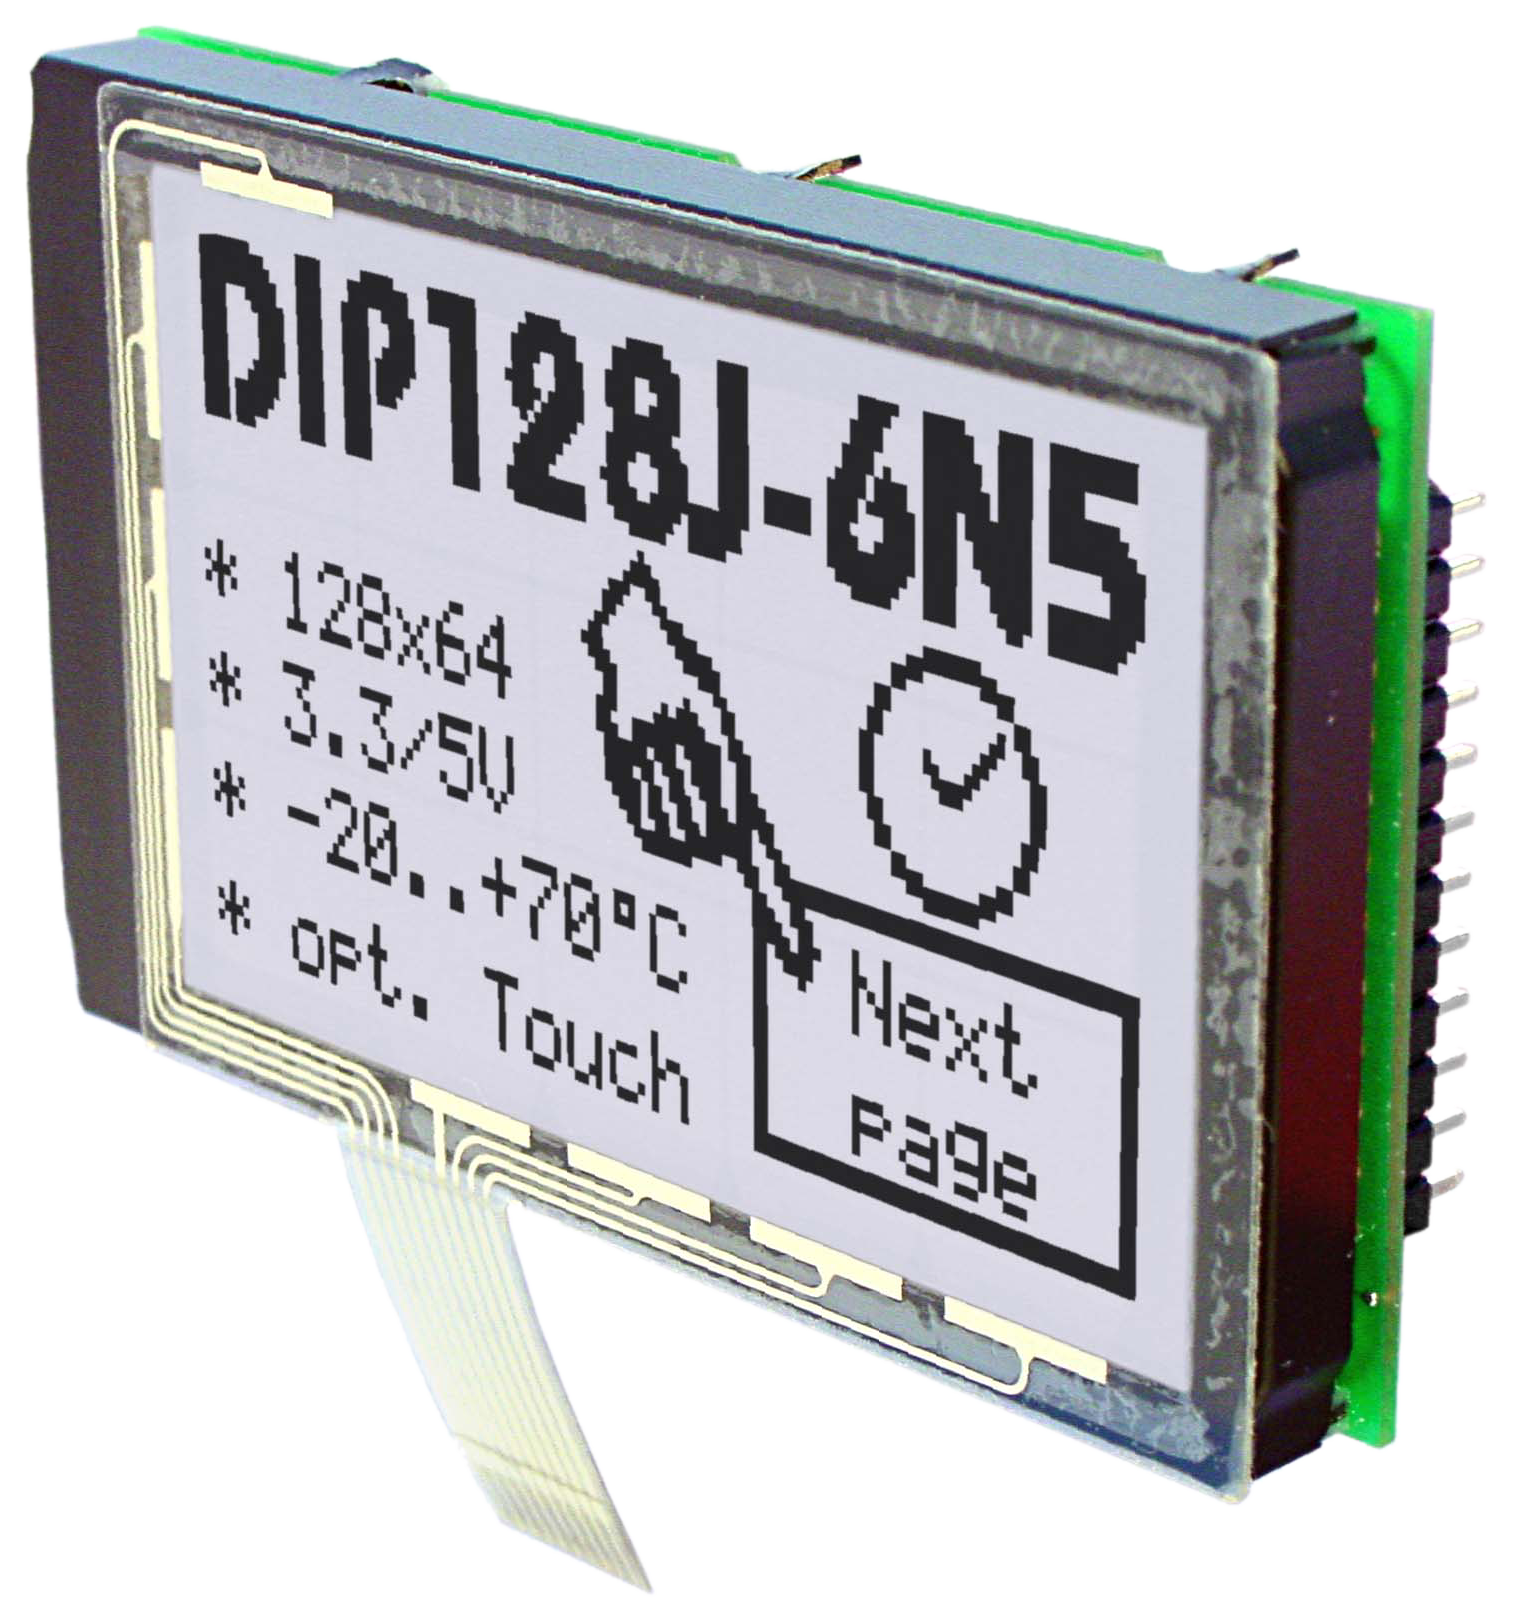 Panels Displays in Chip on Board (COB) TEchnik, hier EA DIP128 als Grafikdisplay mit 128x64 Pixeln